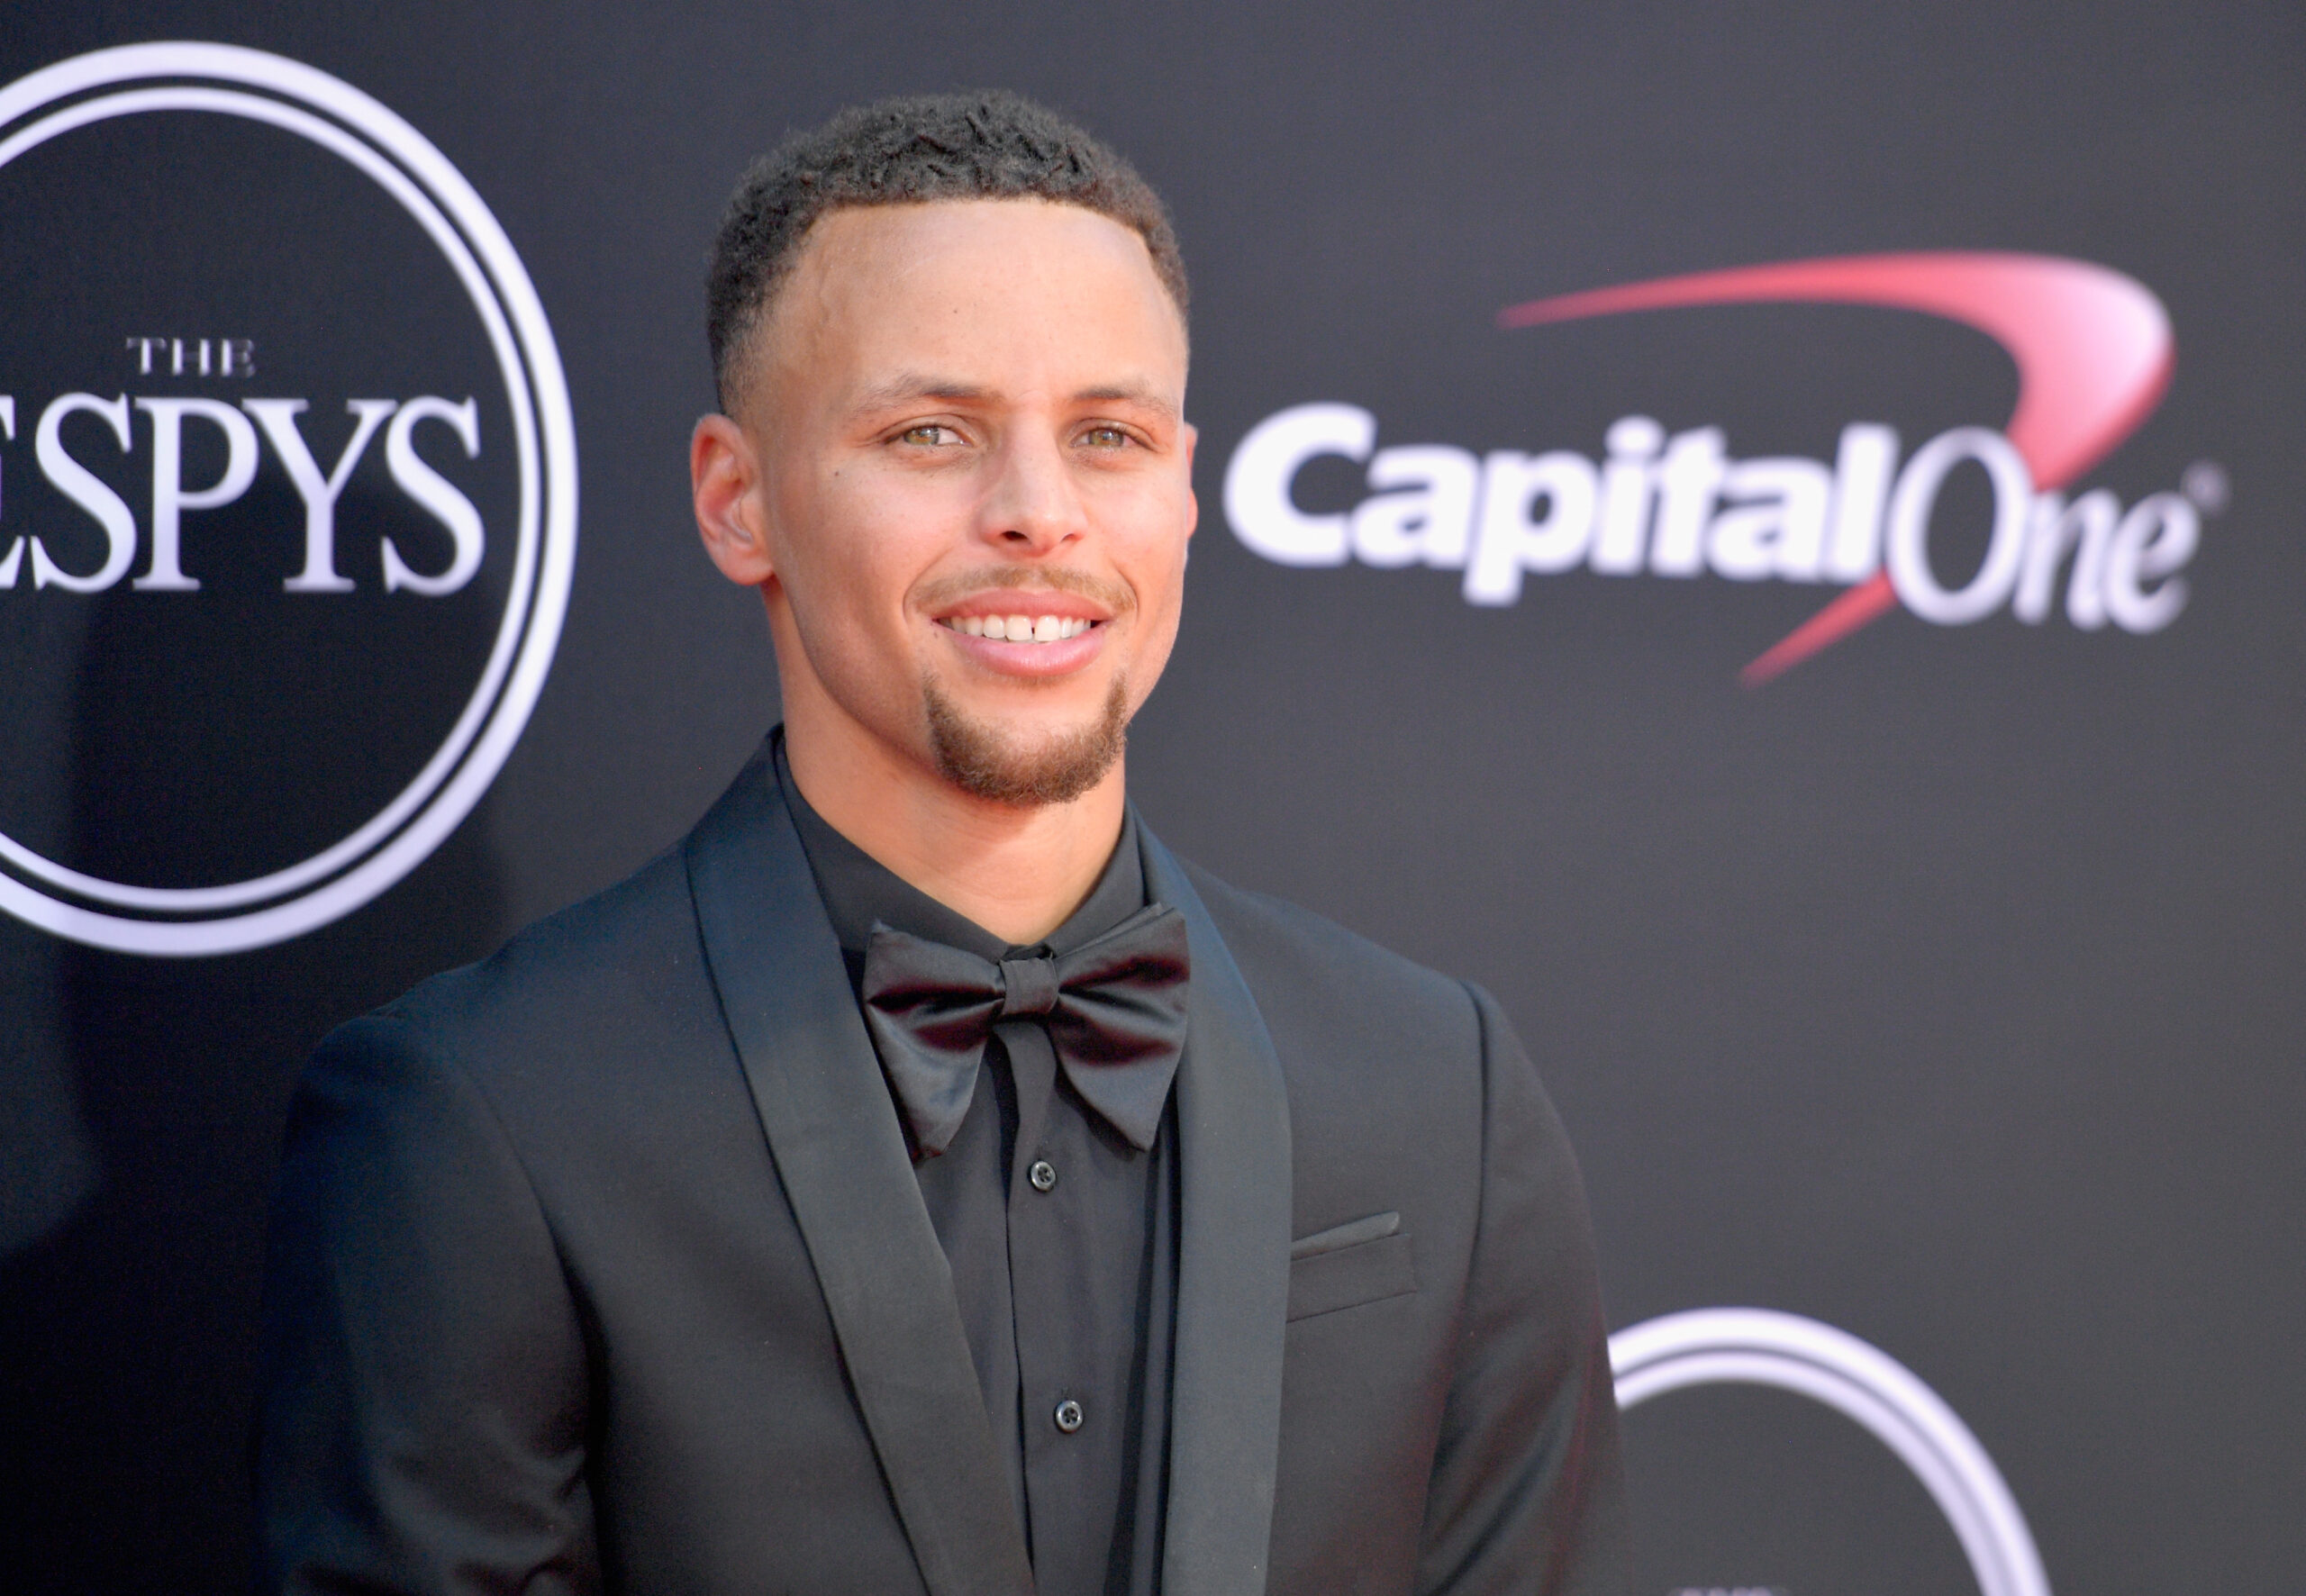 Stephen Curry to Host ESPN’s ESPYS Awards